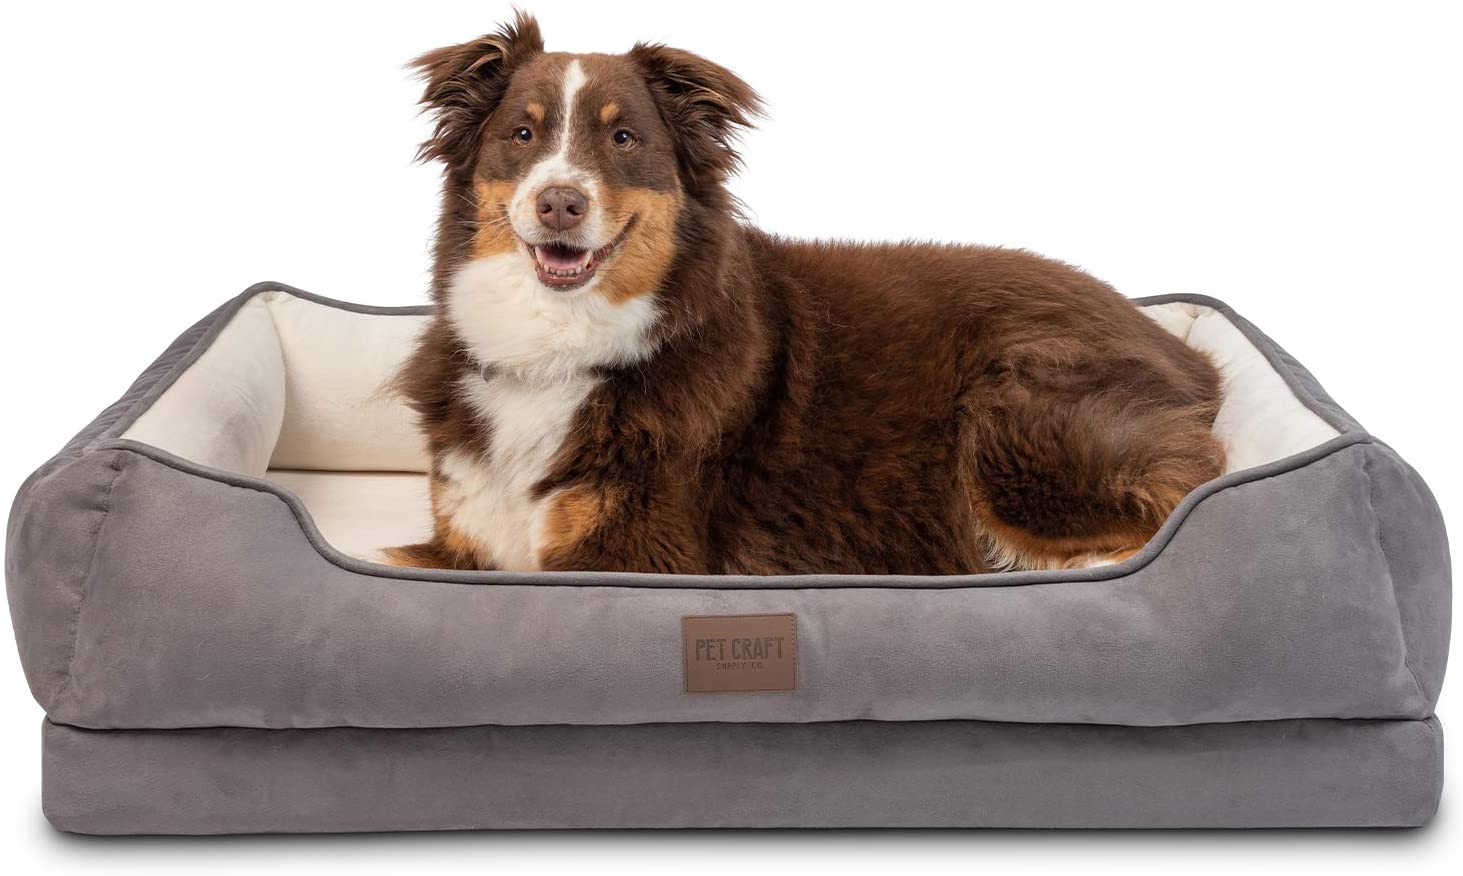 Pet Craft Supply Premium Orthopedic Dog Bed